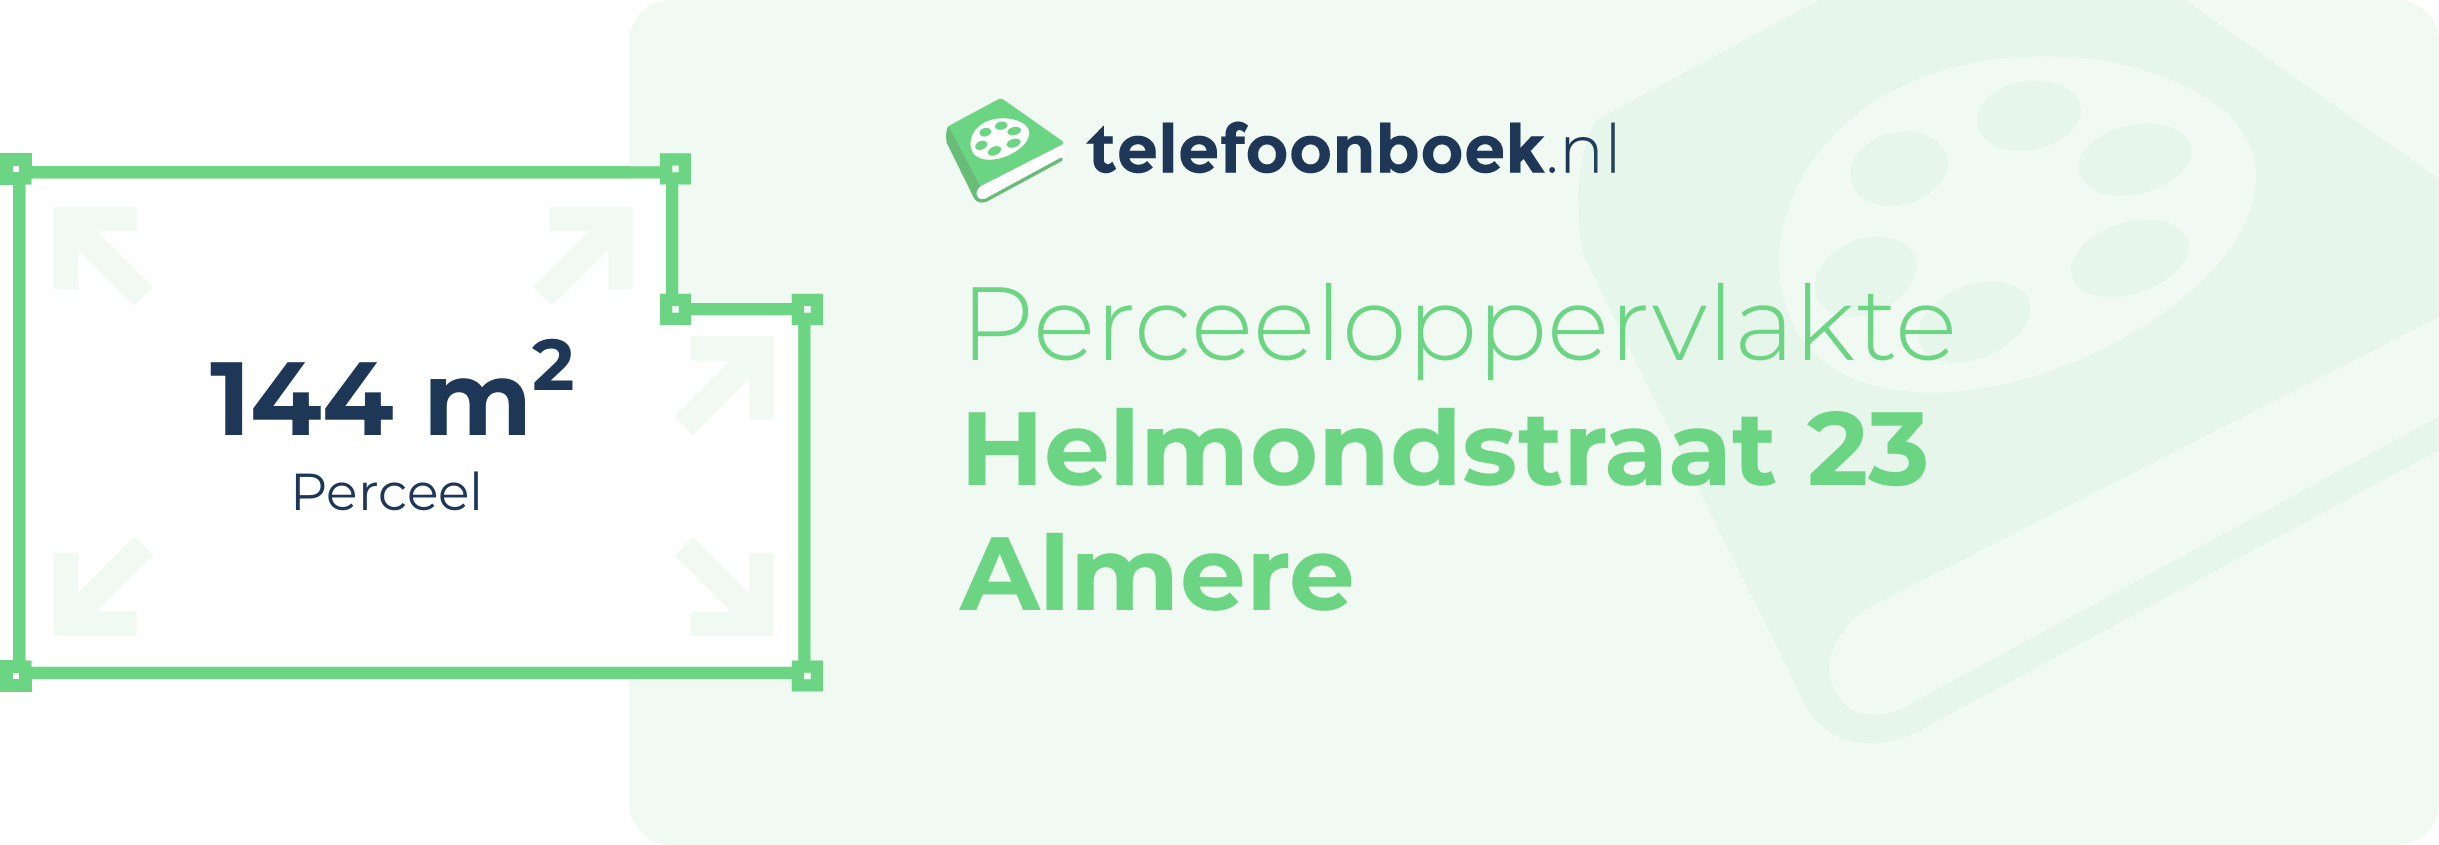 Perceeloppervlakte Helmondstraat 23 Almere